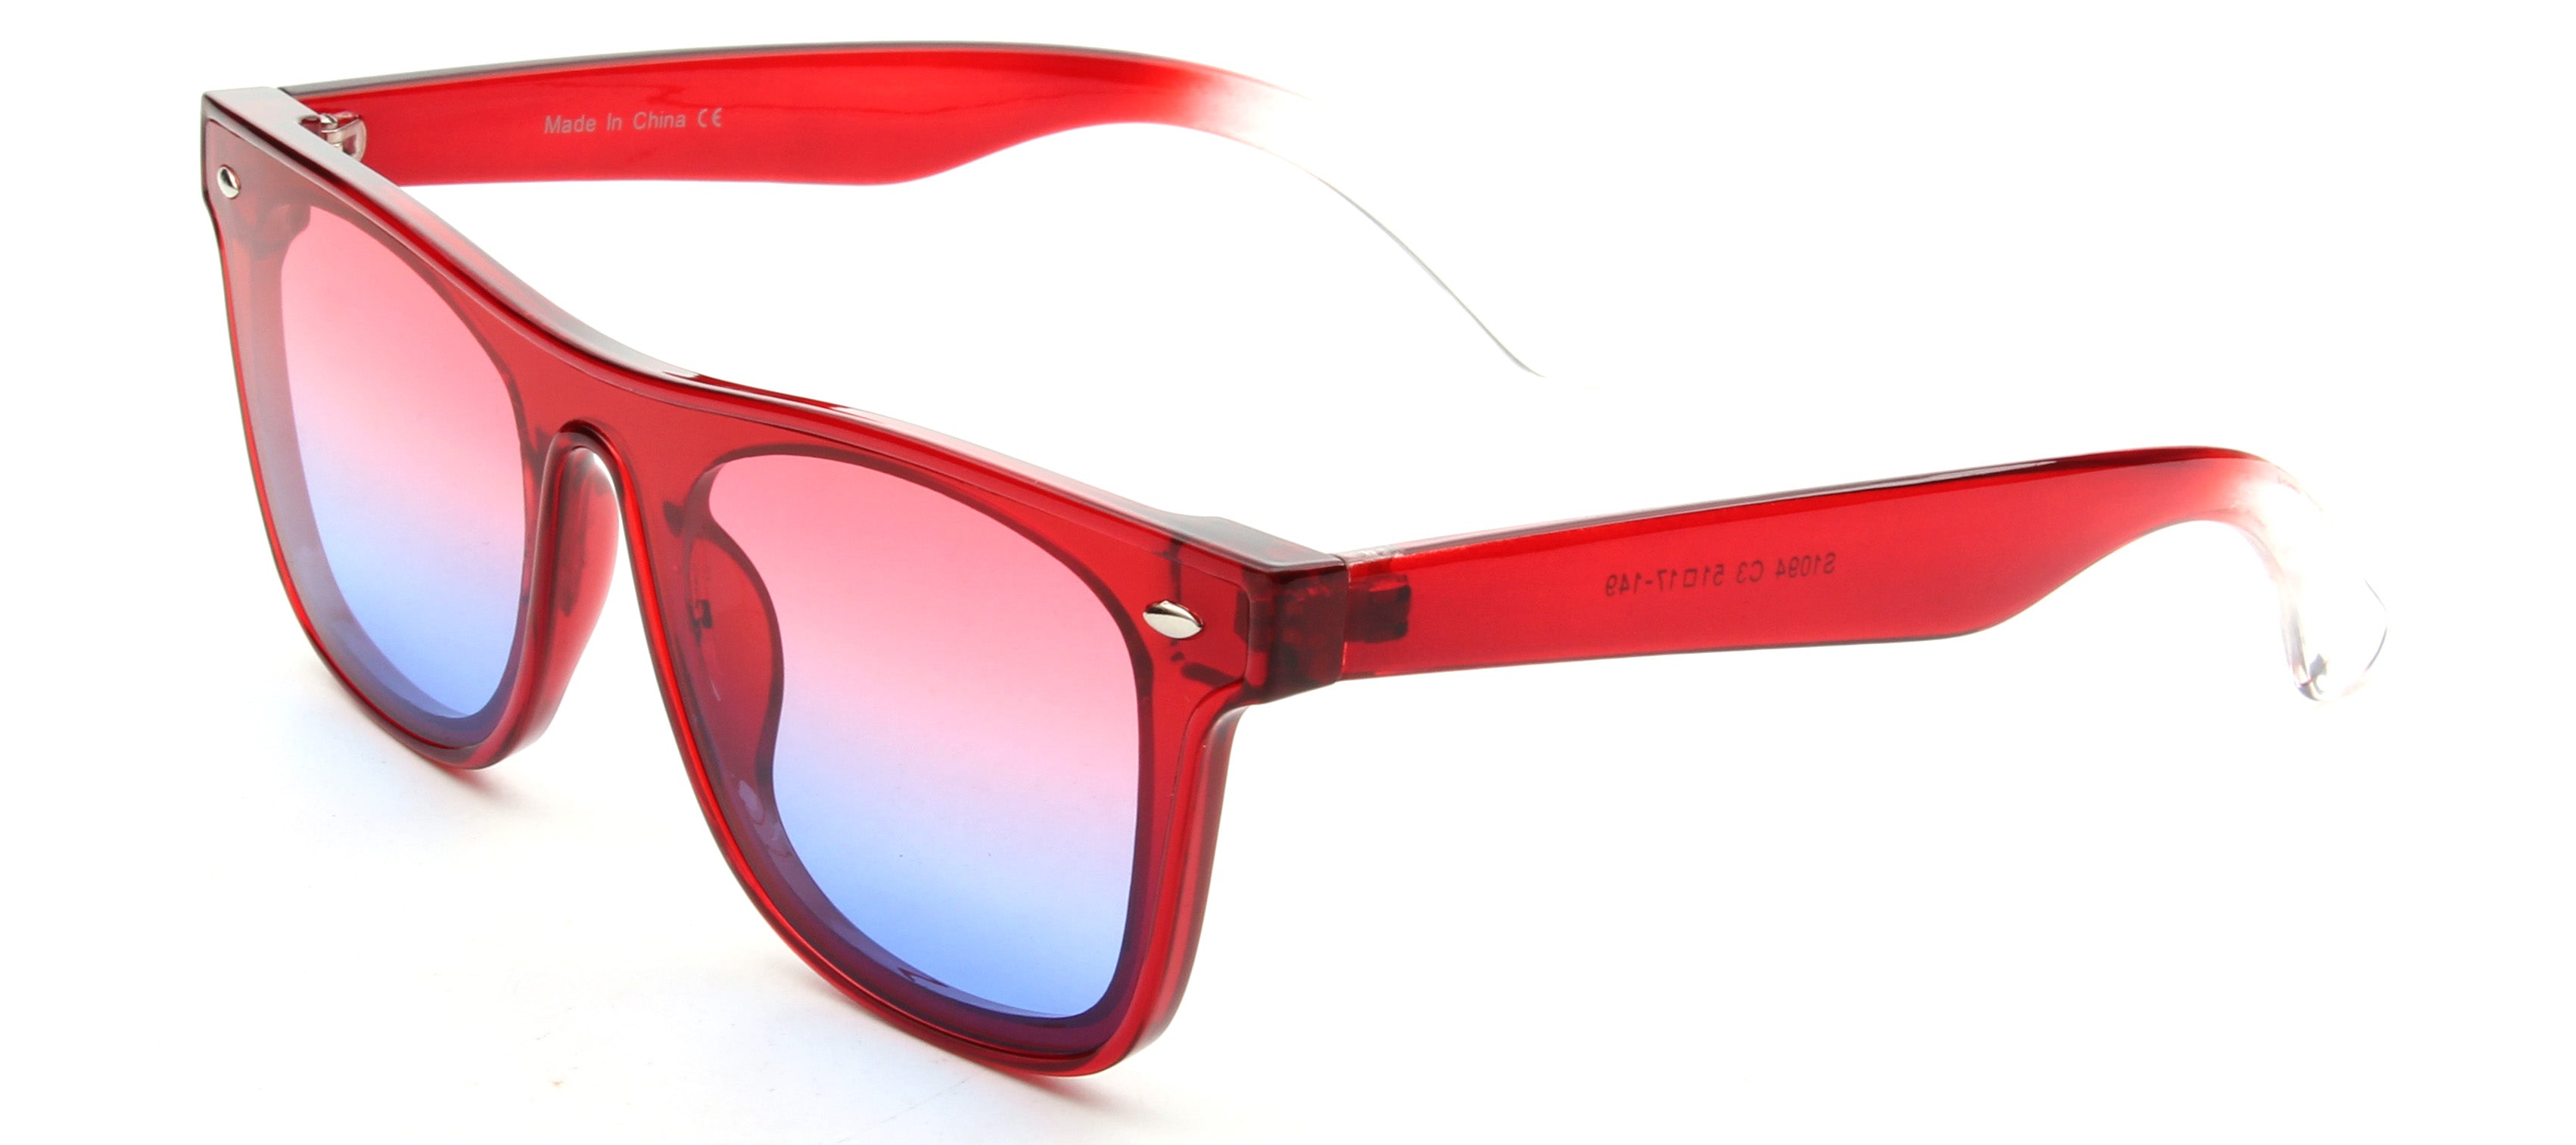 S1094 - Women Square Flat Lens Fashion SUNGLASSES Red